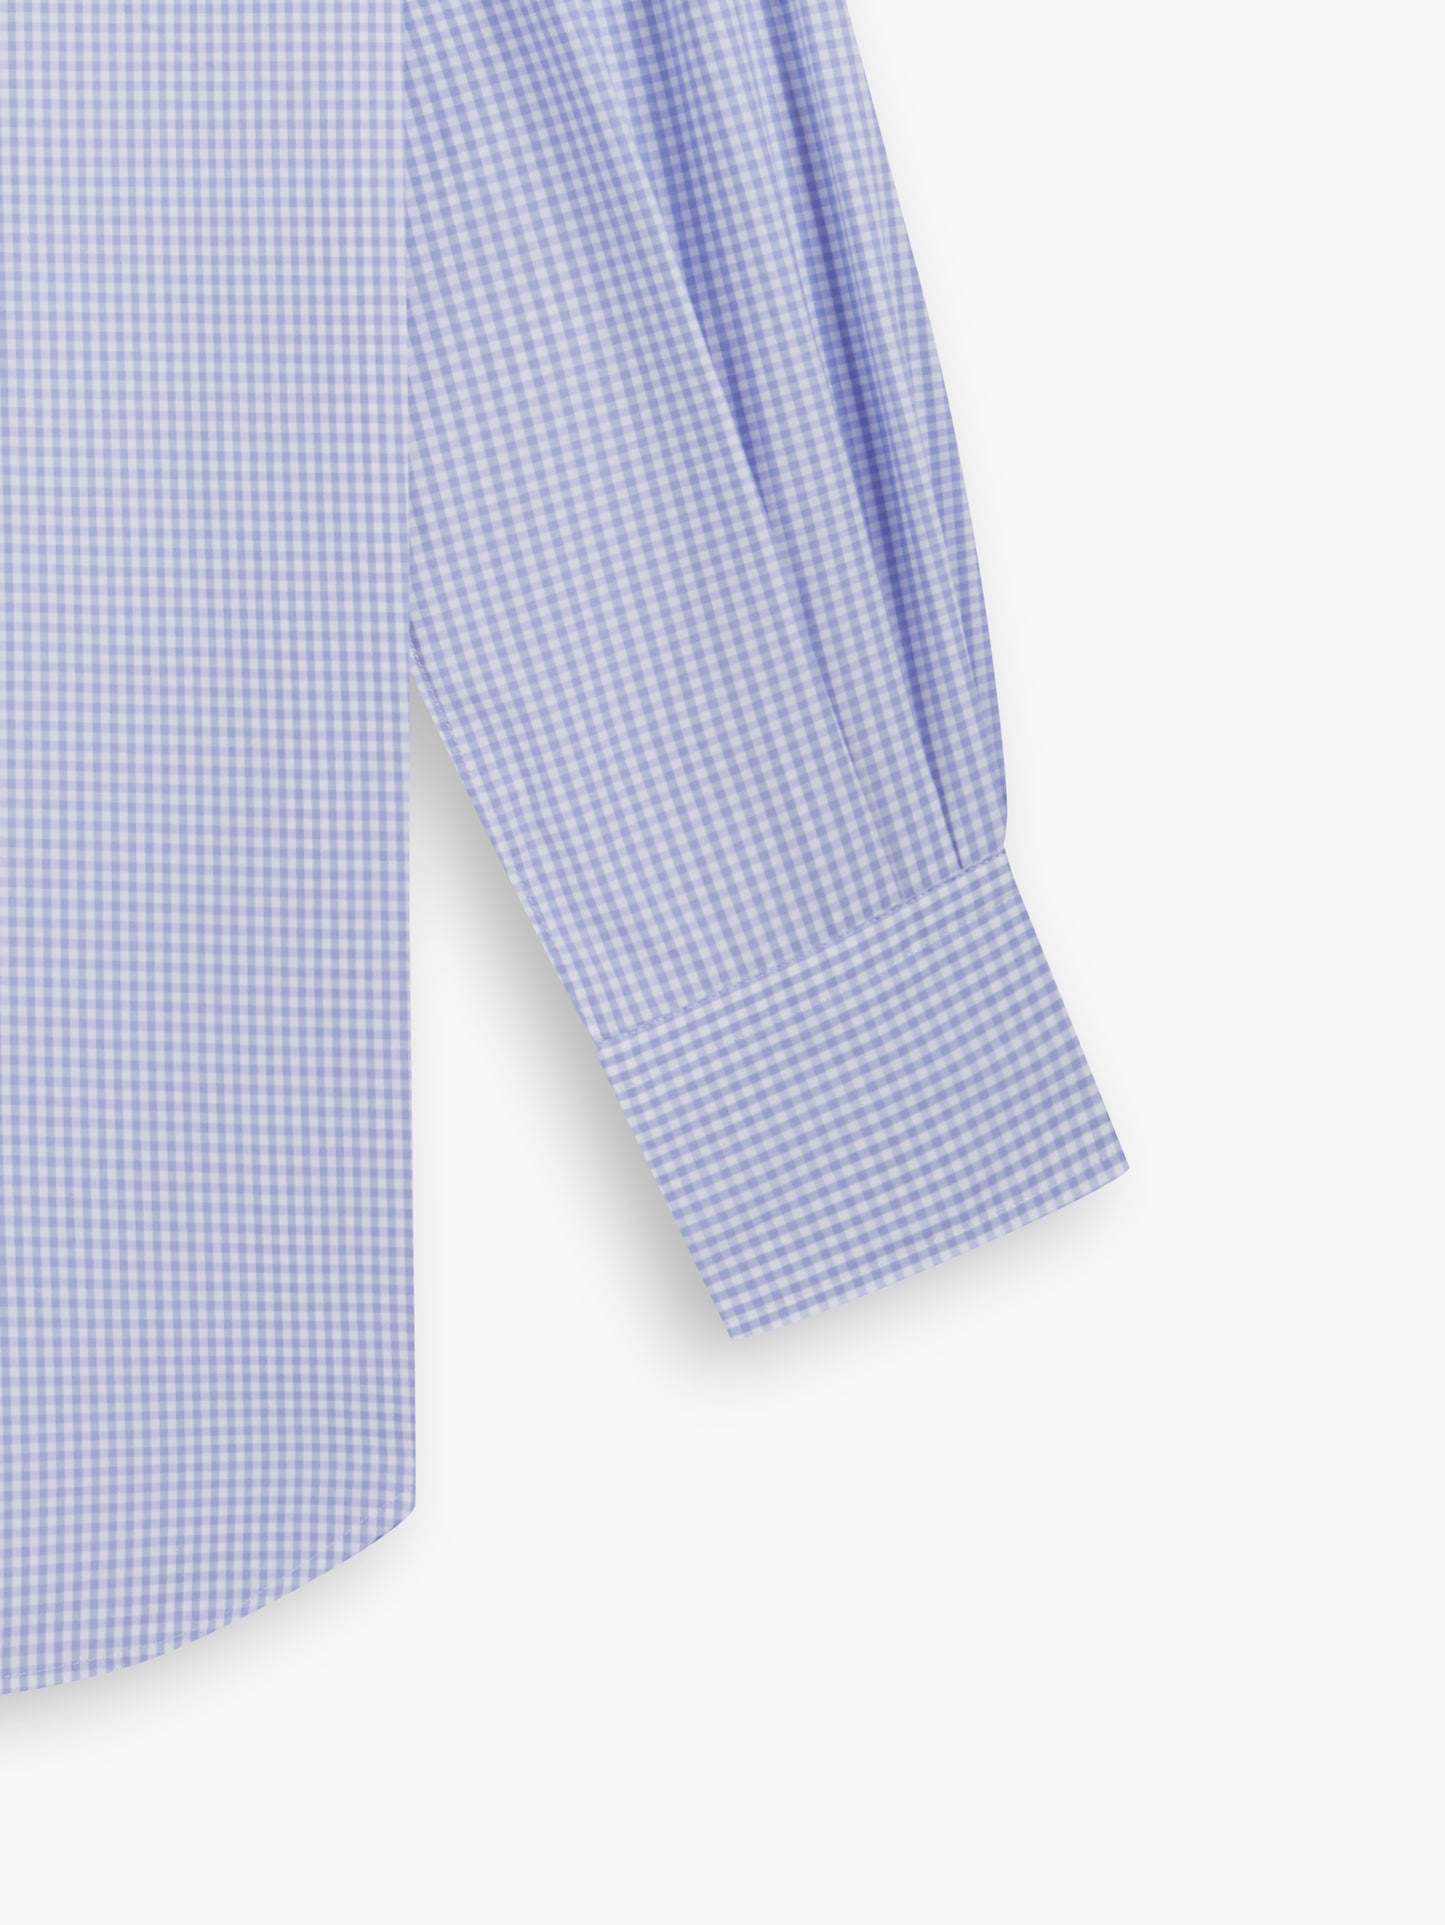 Light Blue Small Gingham Poplin Regular Fit Single Cuff Classic Collar Shirt